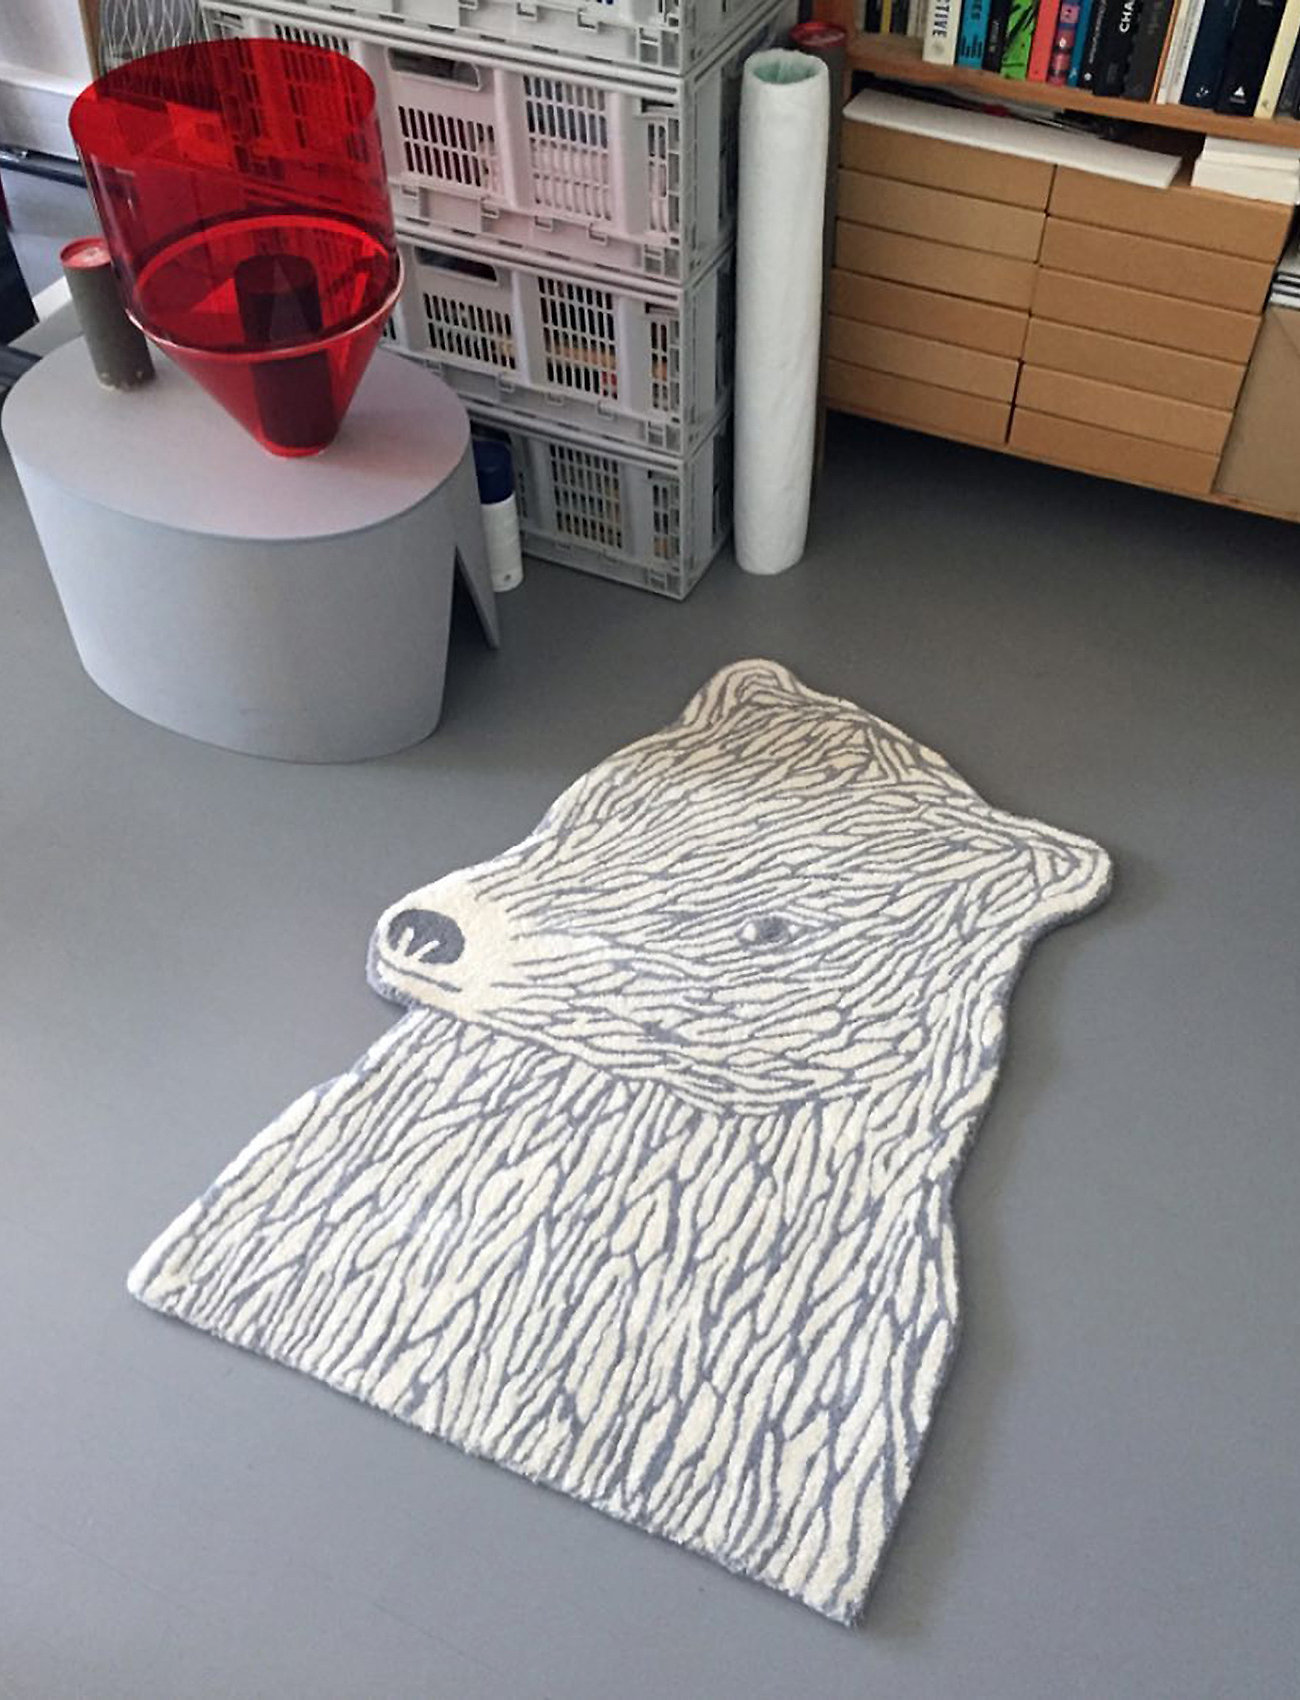 EO - Bear Carpet - dywany i maty - grey and white - 1